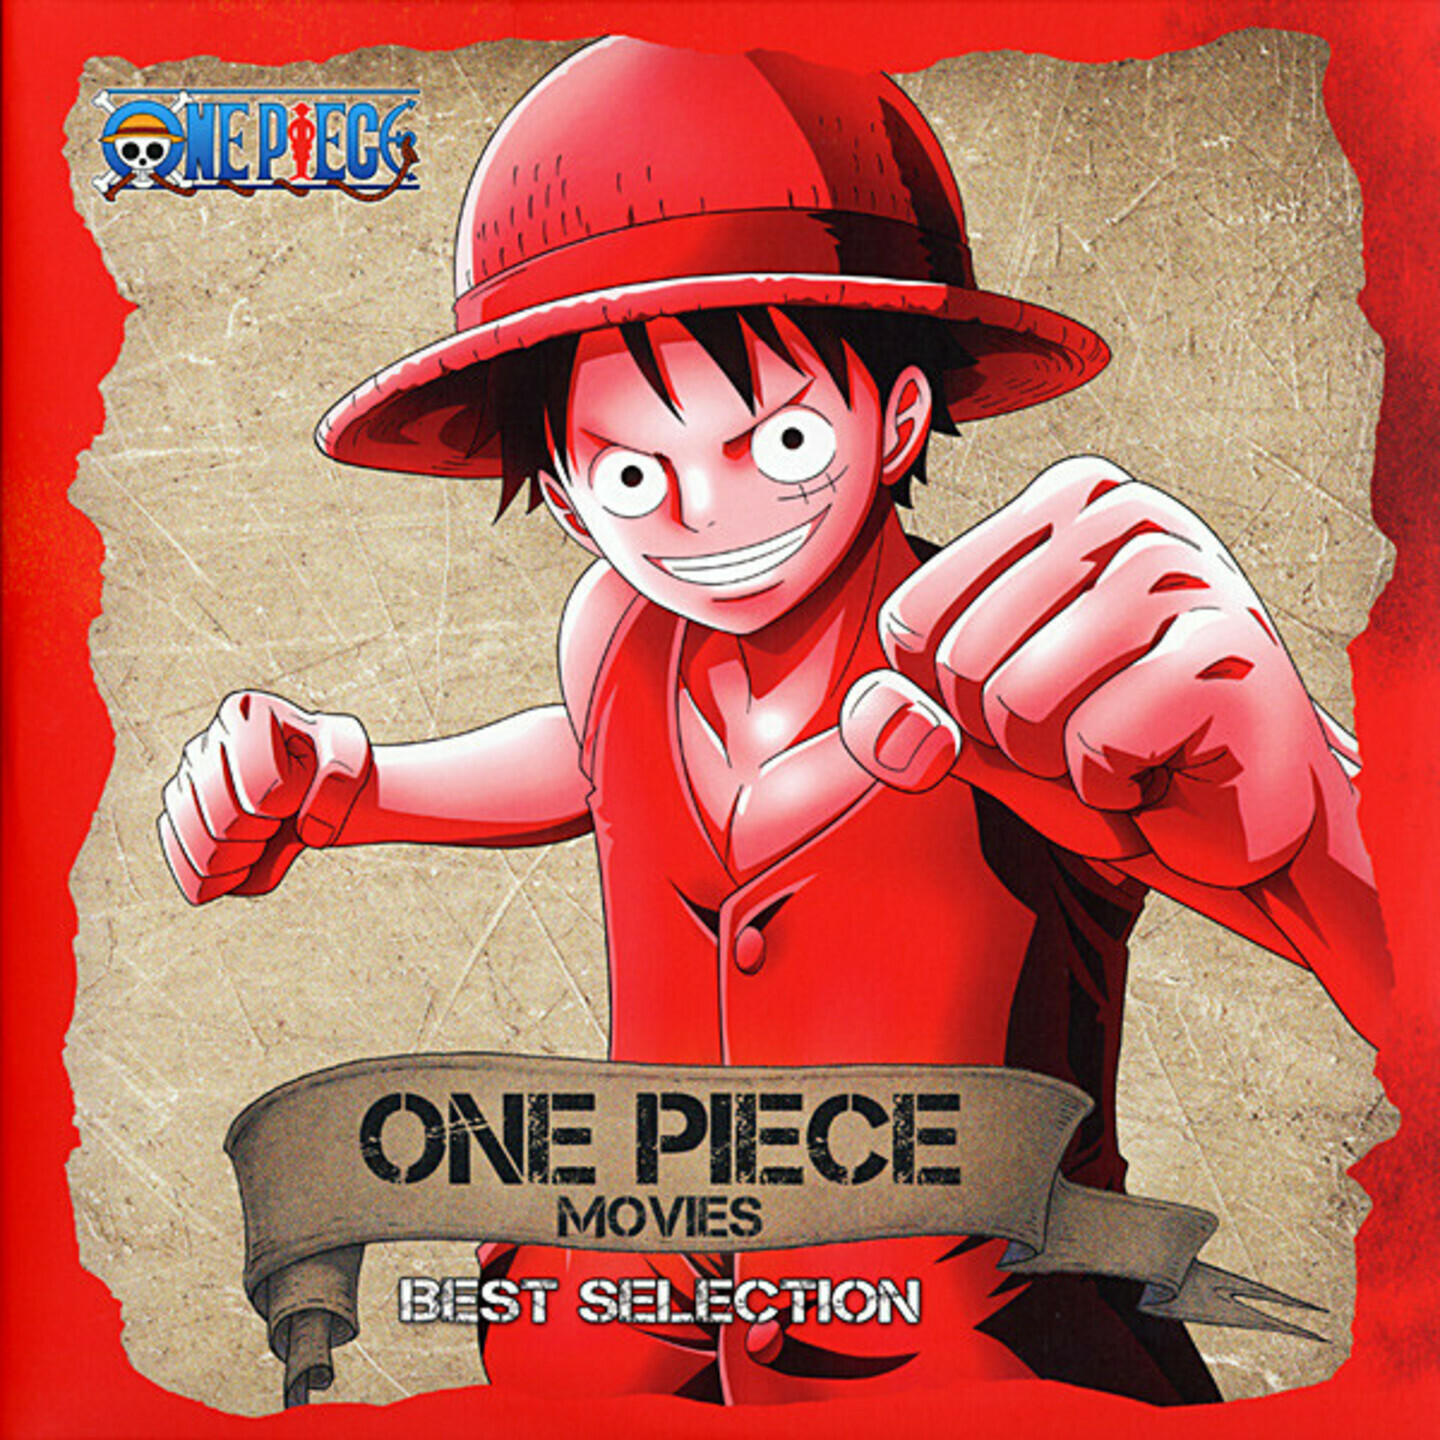 KOUHEI TANAKA, SHIRO HAMAGUCHI, YASUNORI IWASAKI - One Piece Movies Best Selection 2xLP Red & Blue Vinyl